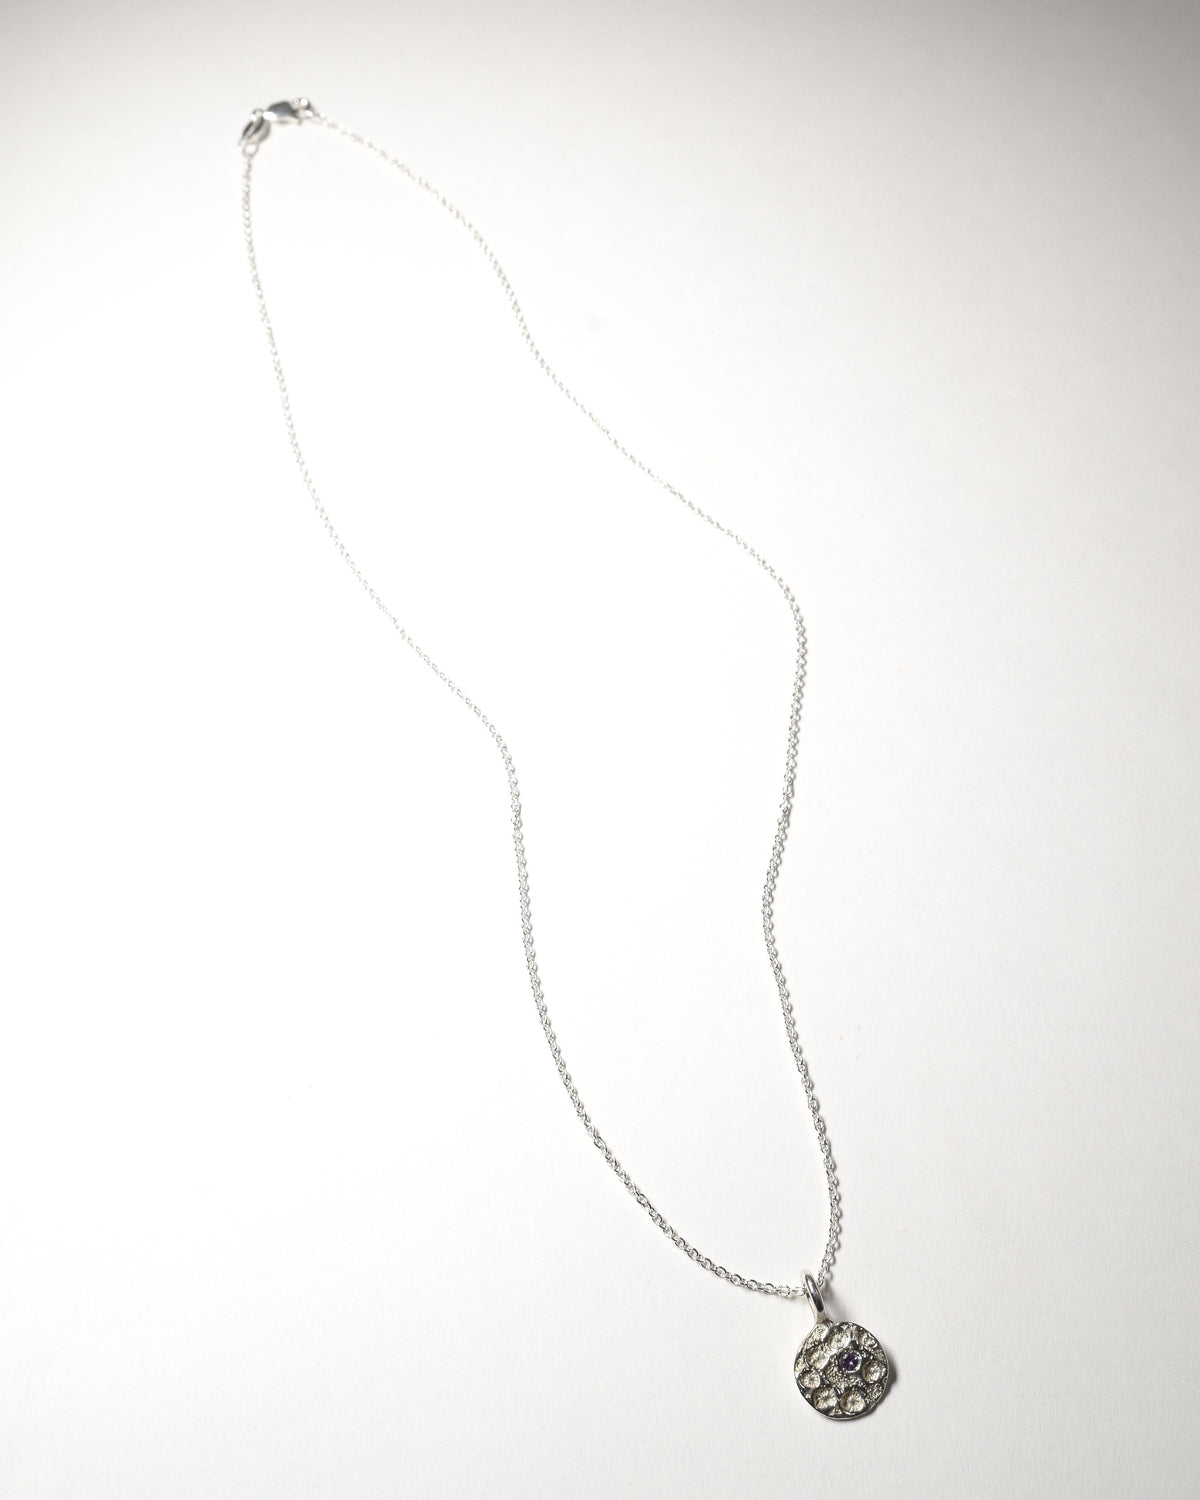 Amethyst Birthstone Necklace - February - Sterling Silver